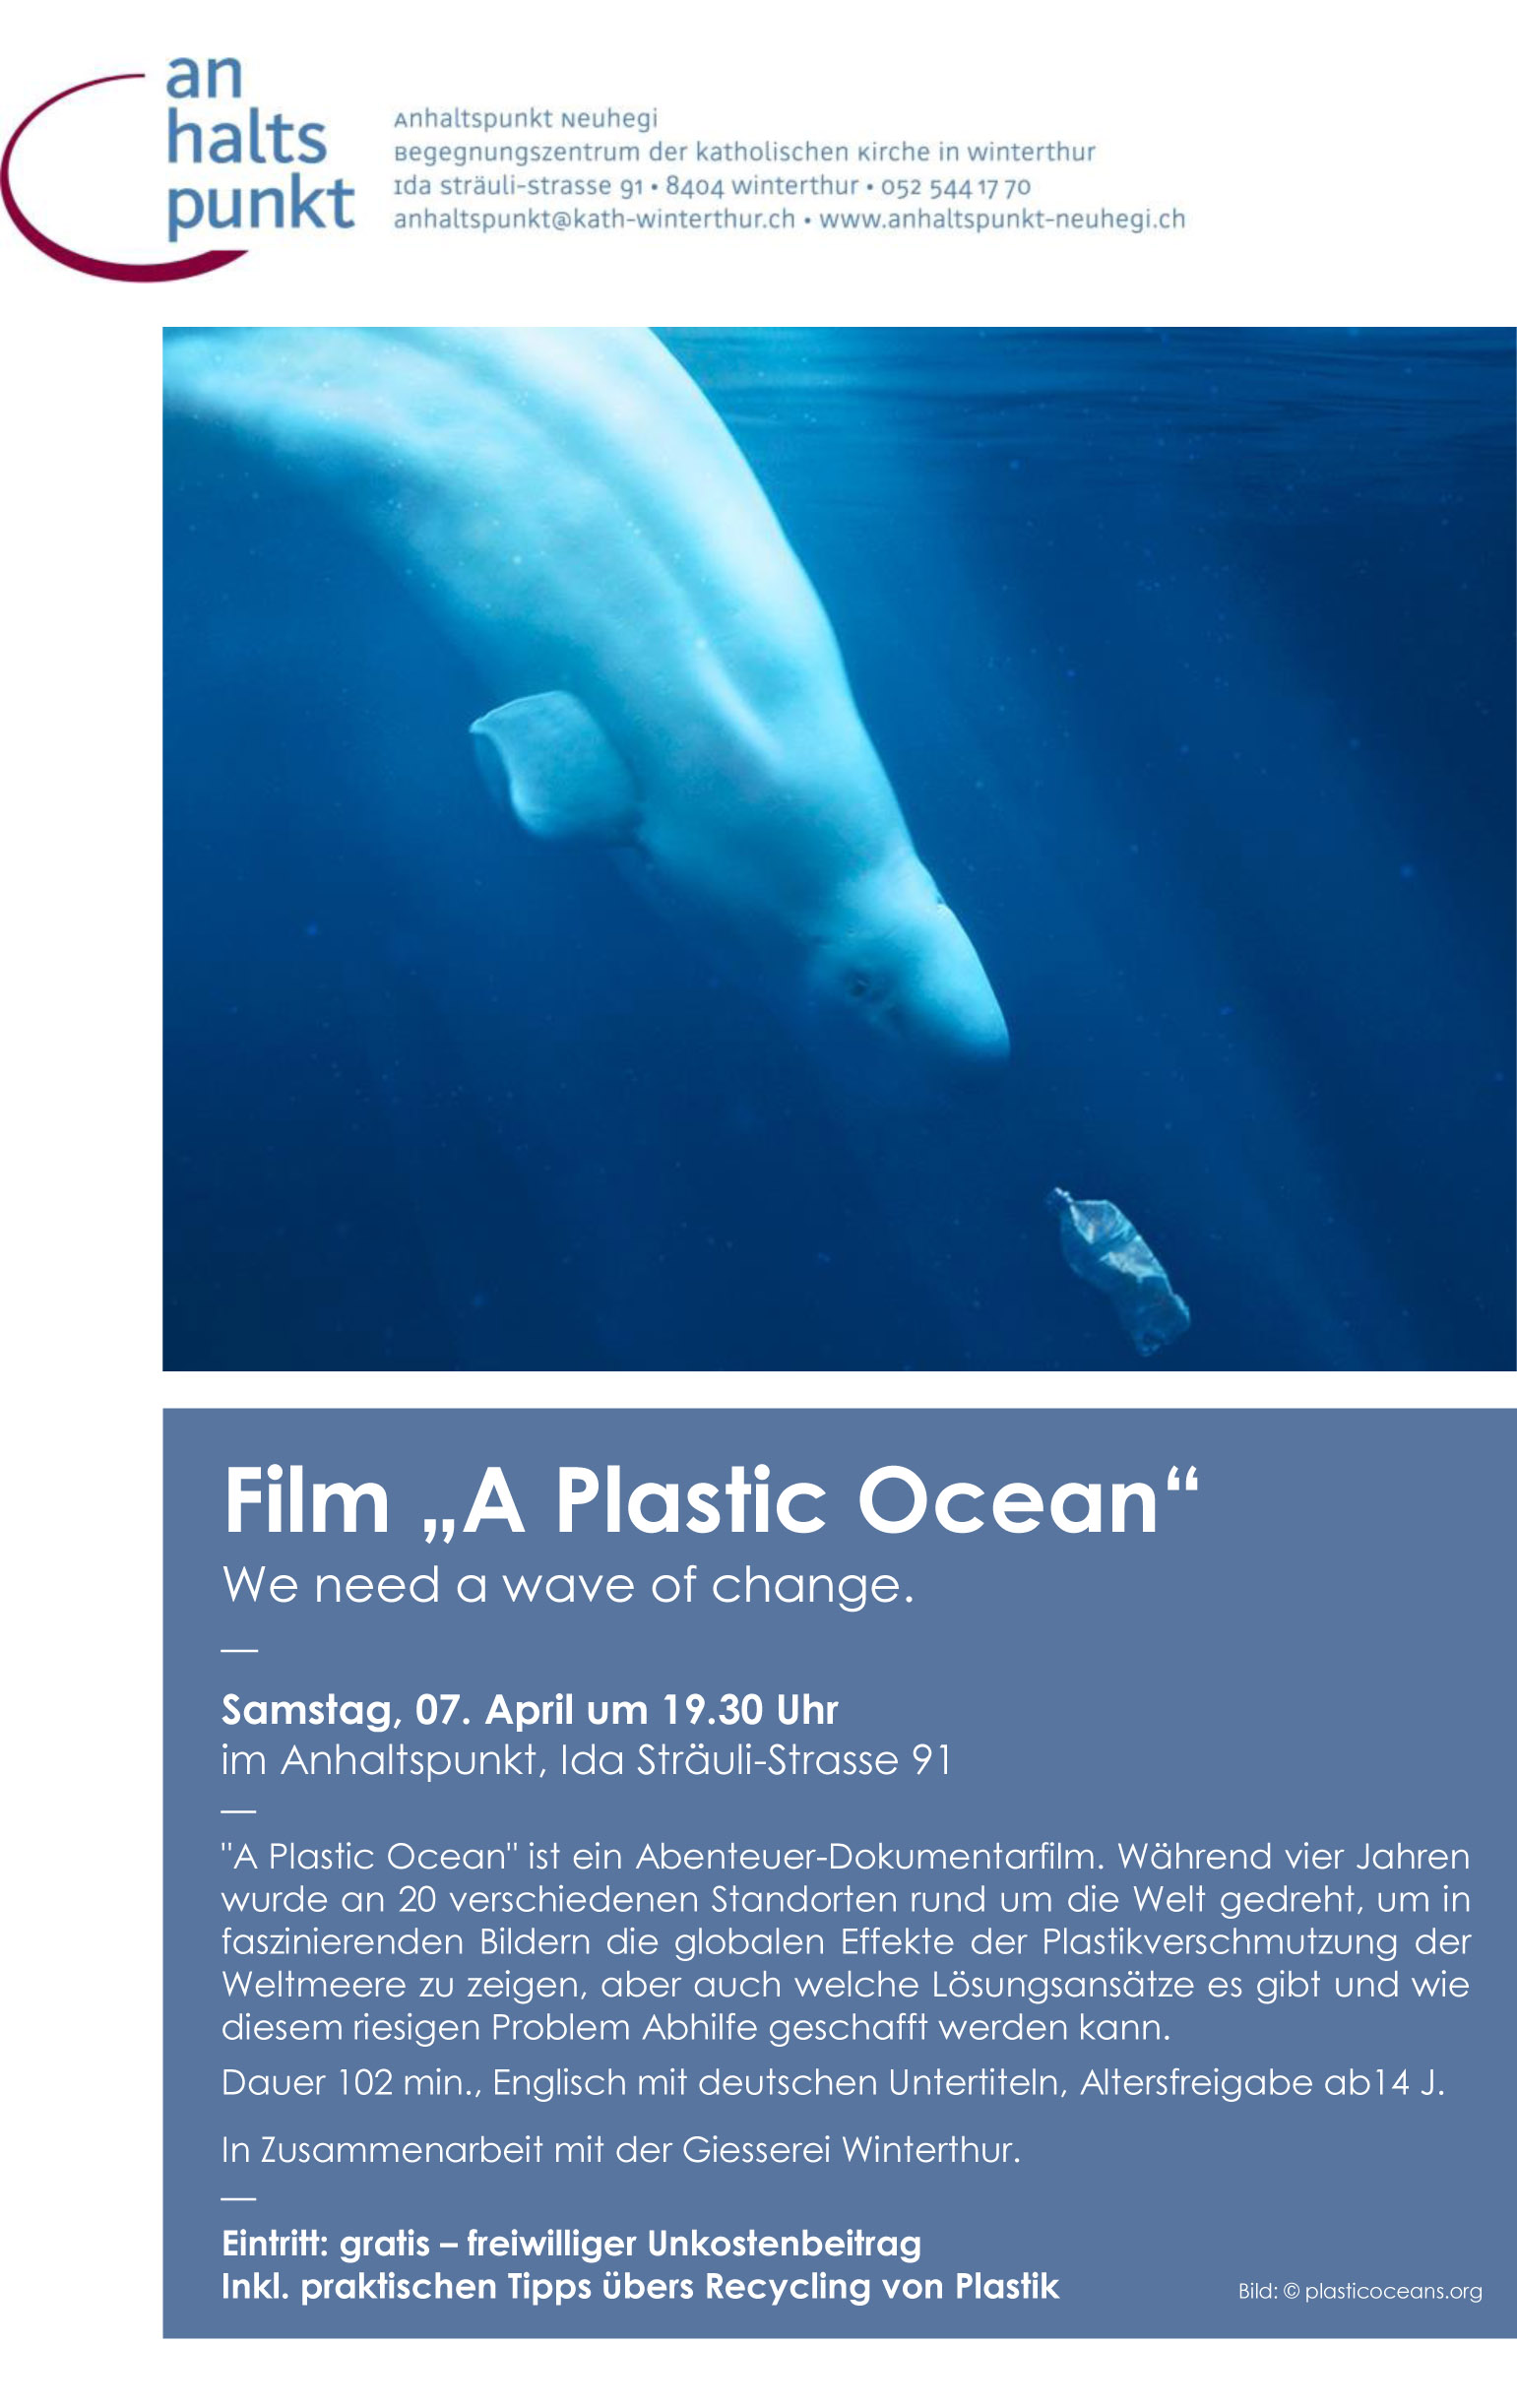 ahp Film A plastic ocean